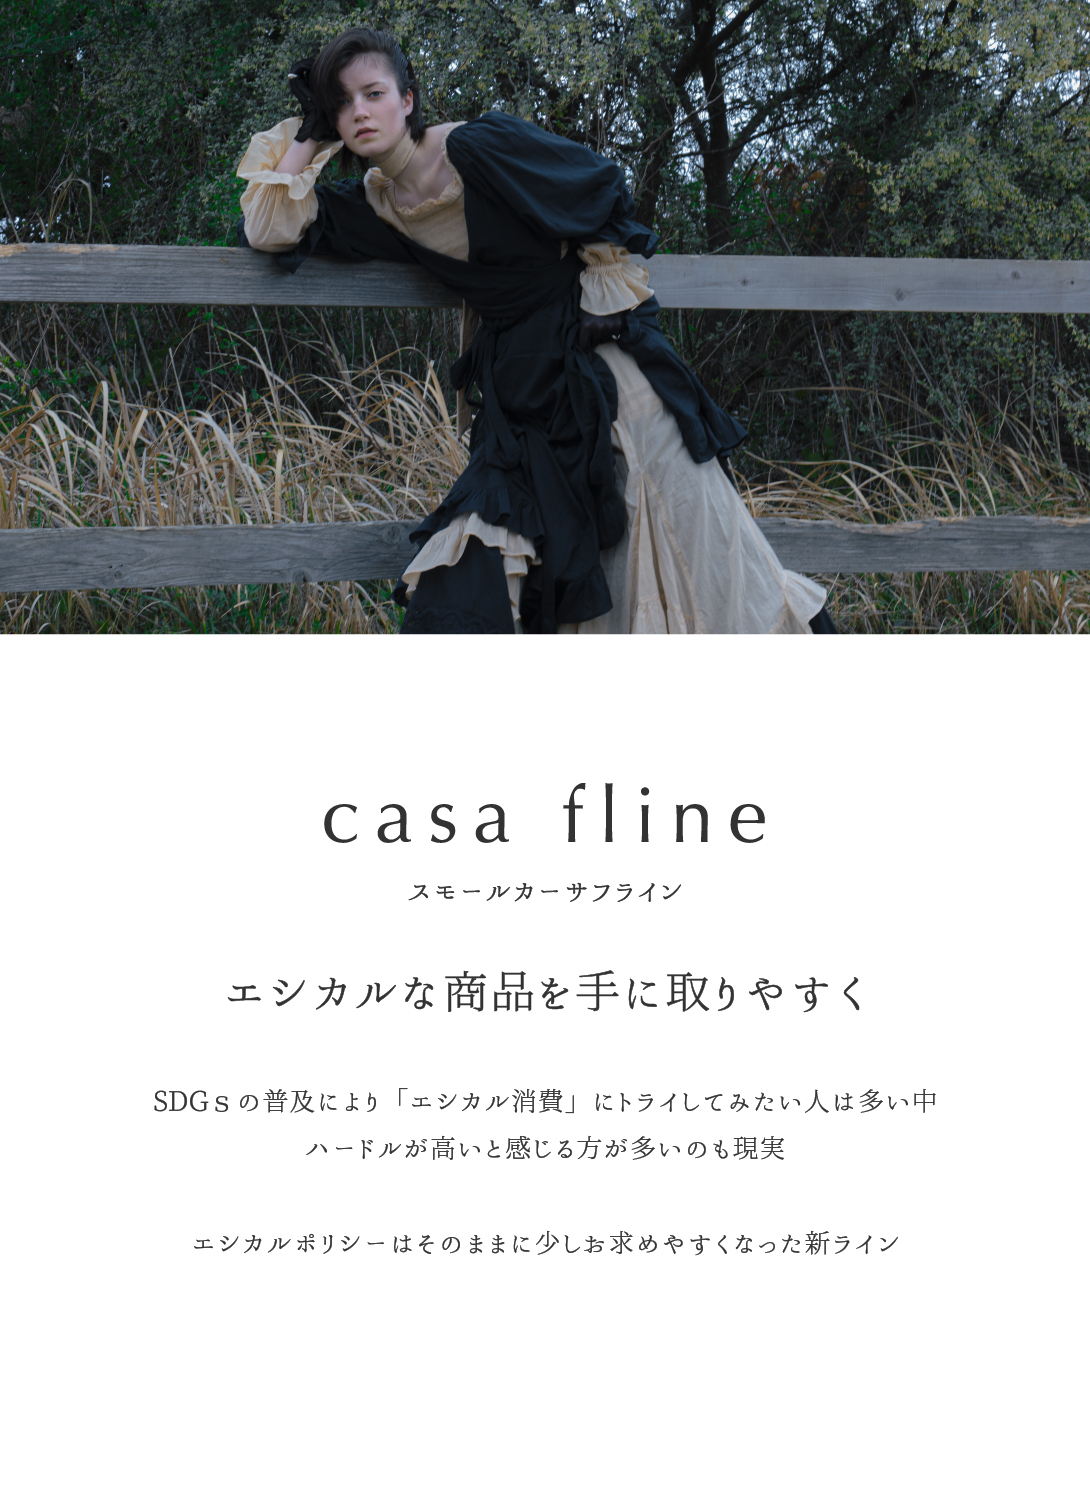 CASA FLINE【フロントホックデニムワンピース】